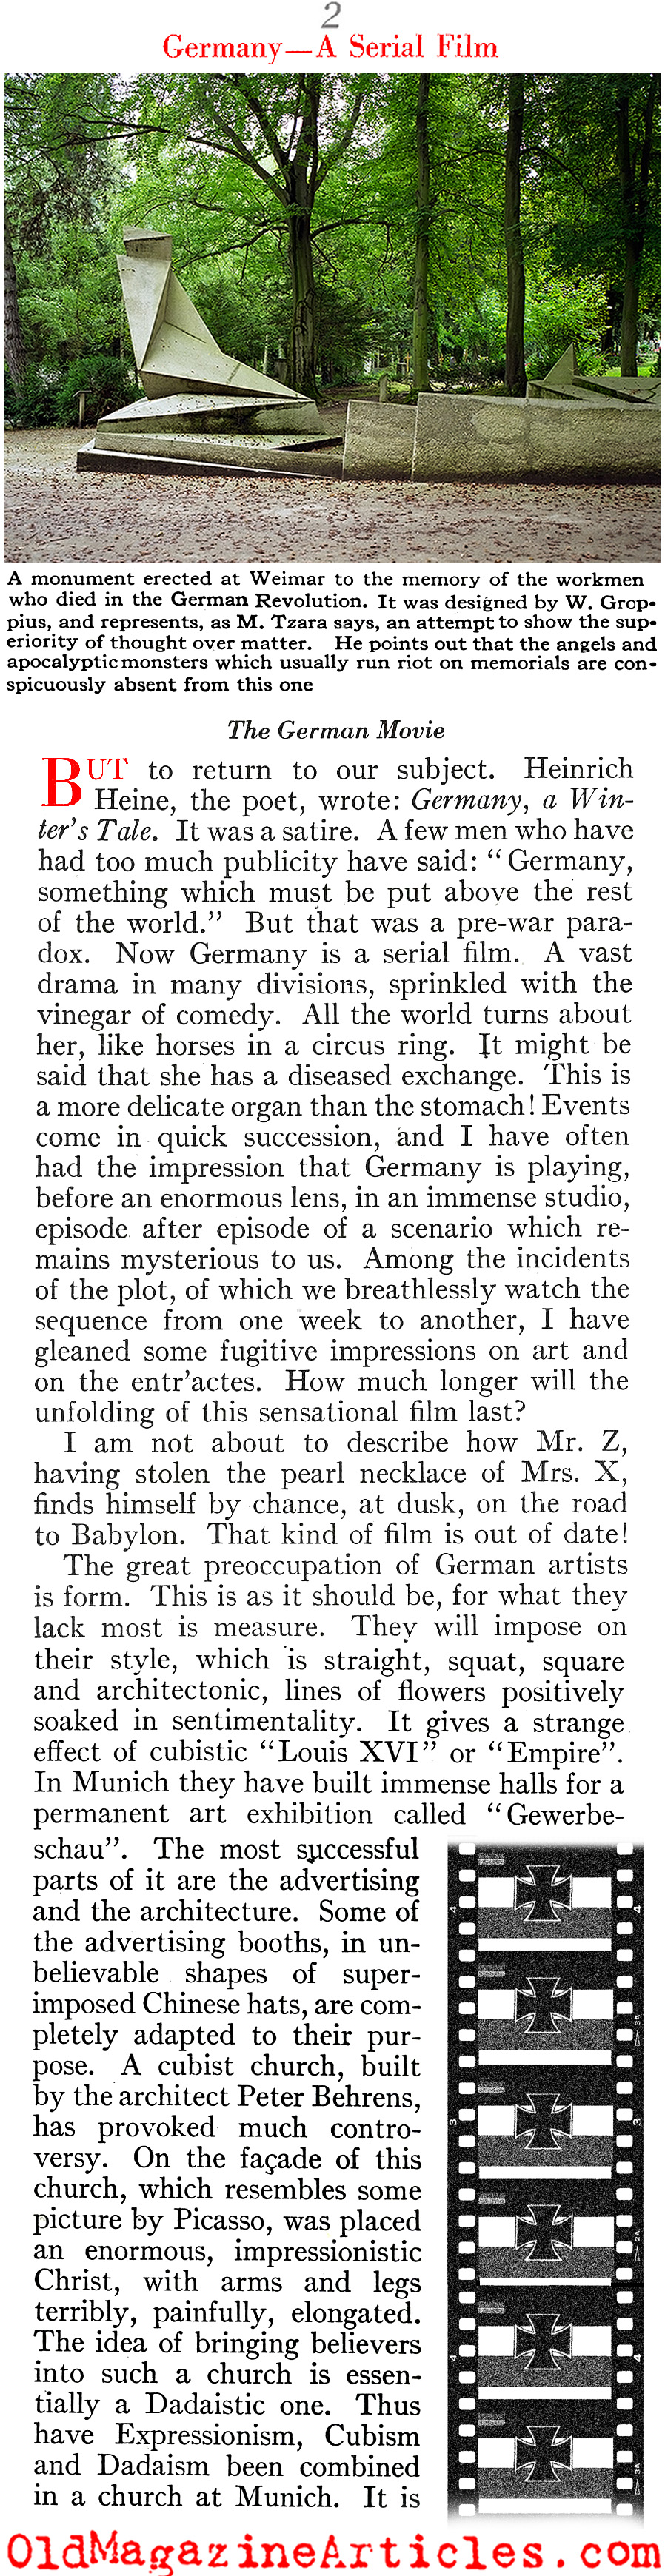 Tristan Tzara on the New Expressionists (Vanity Fair Magazine, 1923)